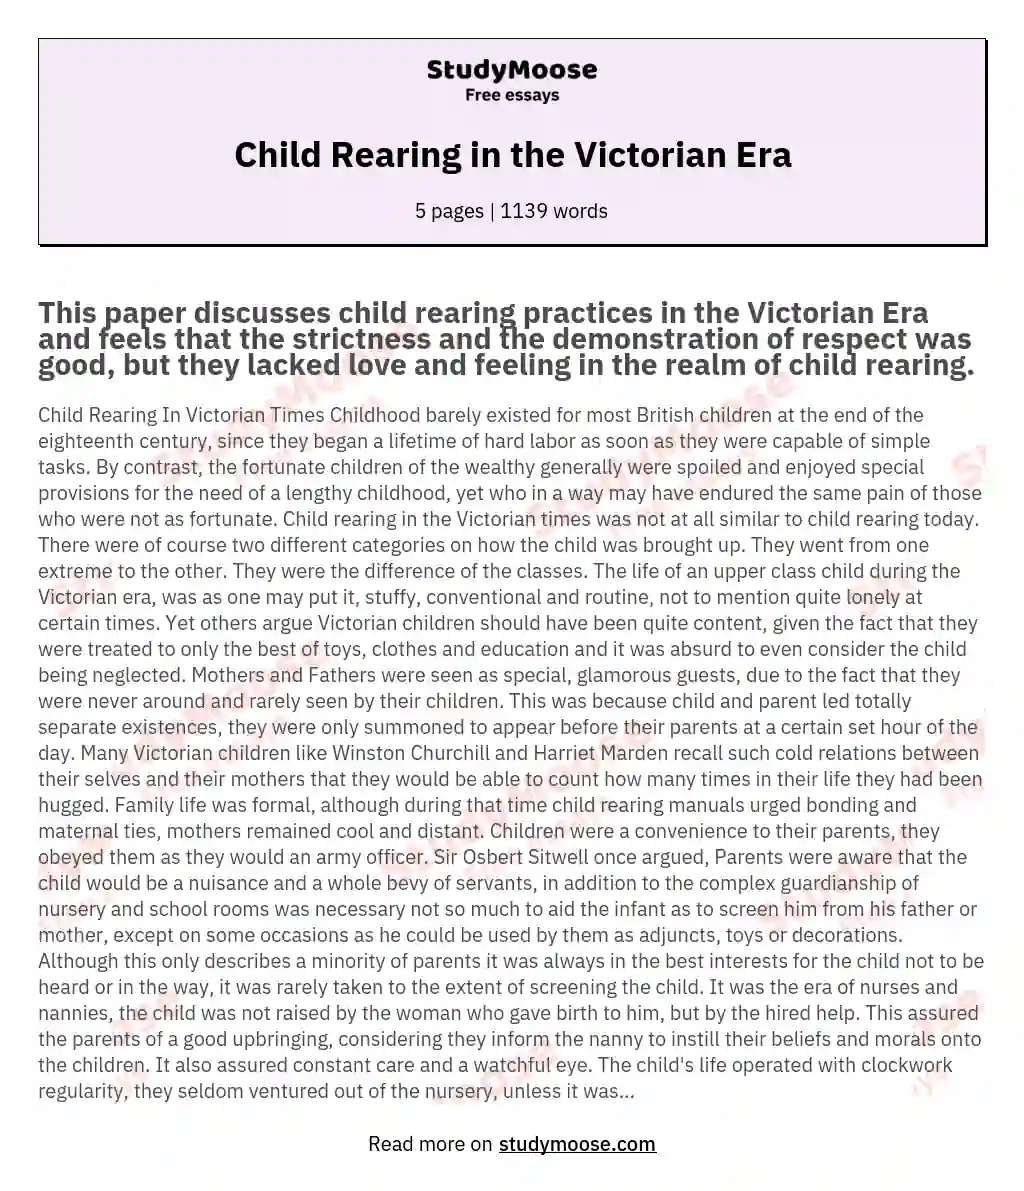 Child Rearing in the Victorian Era essay